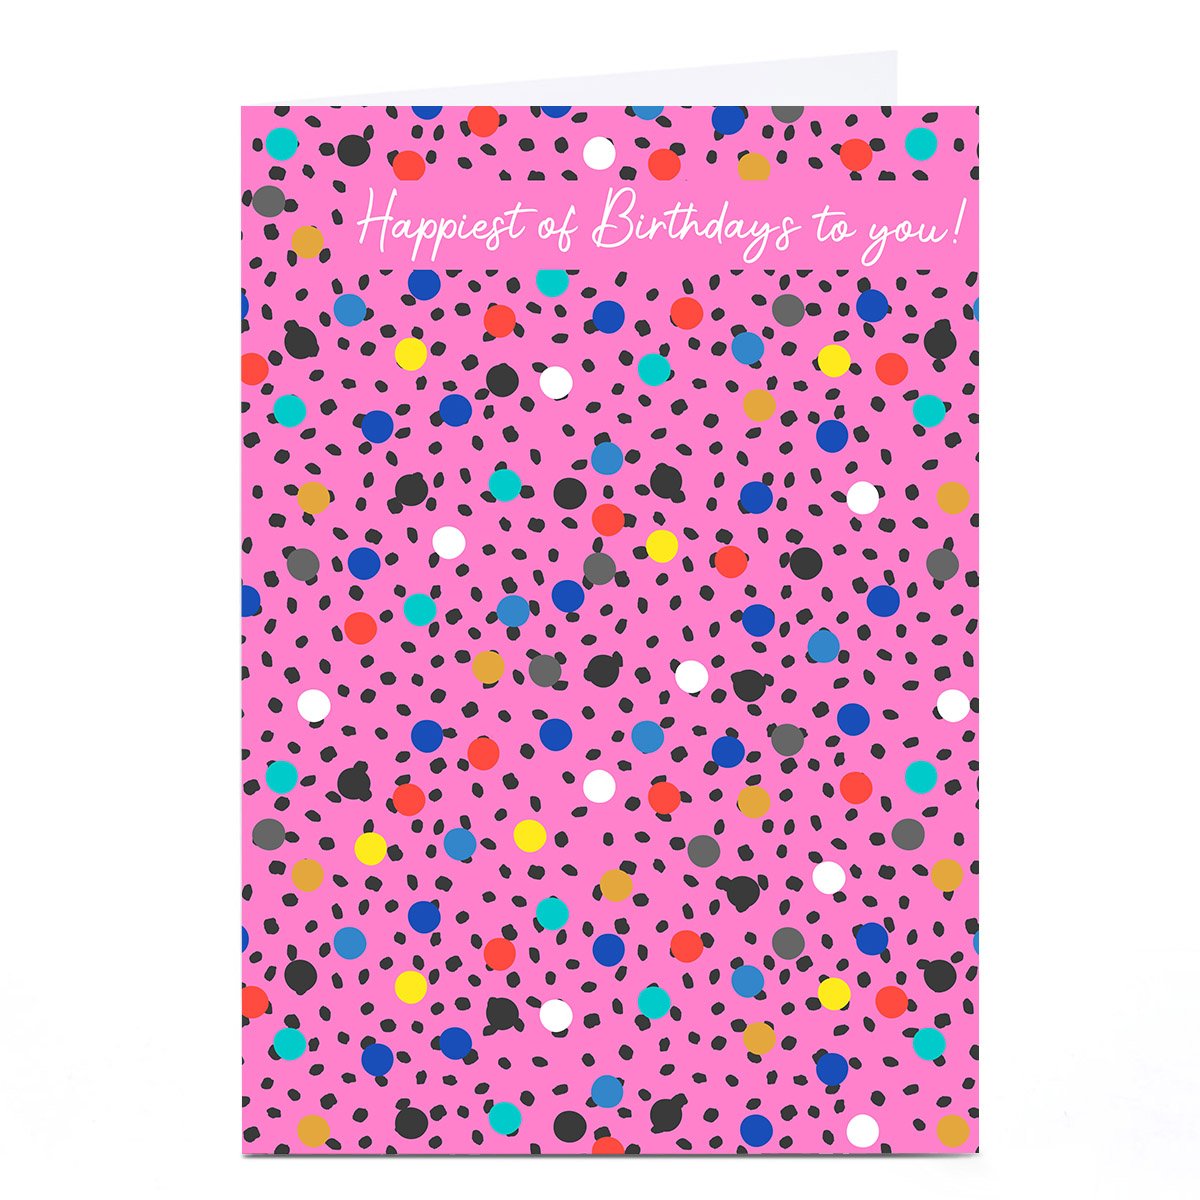 Personalised Rachel Griffin Birthday Card - Polka Dots